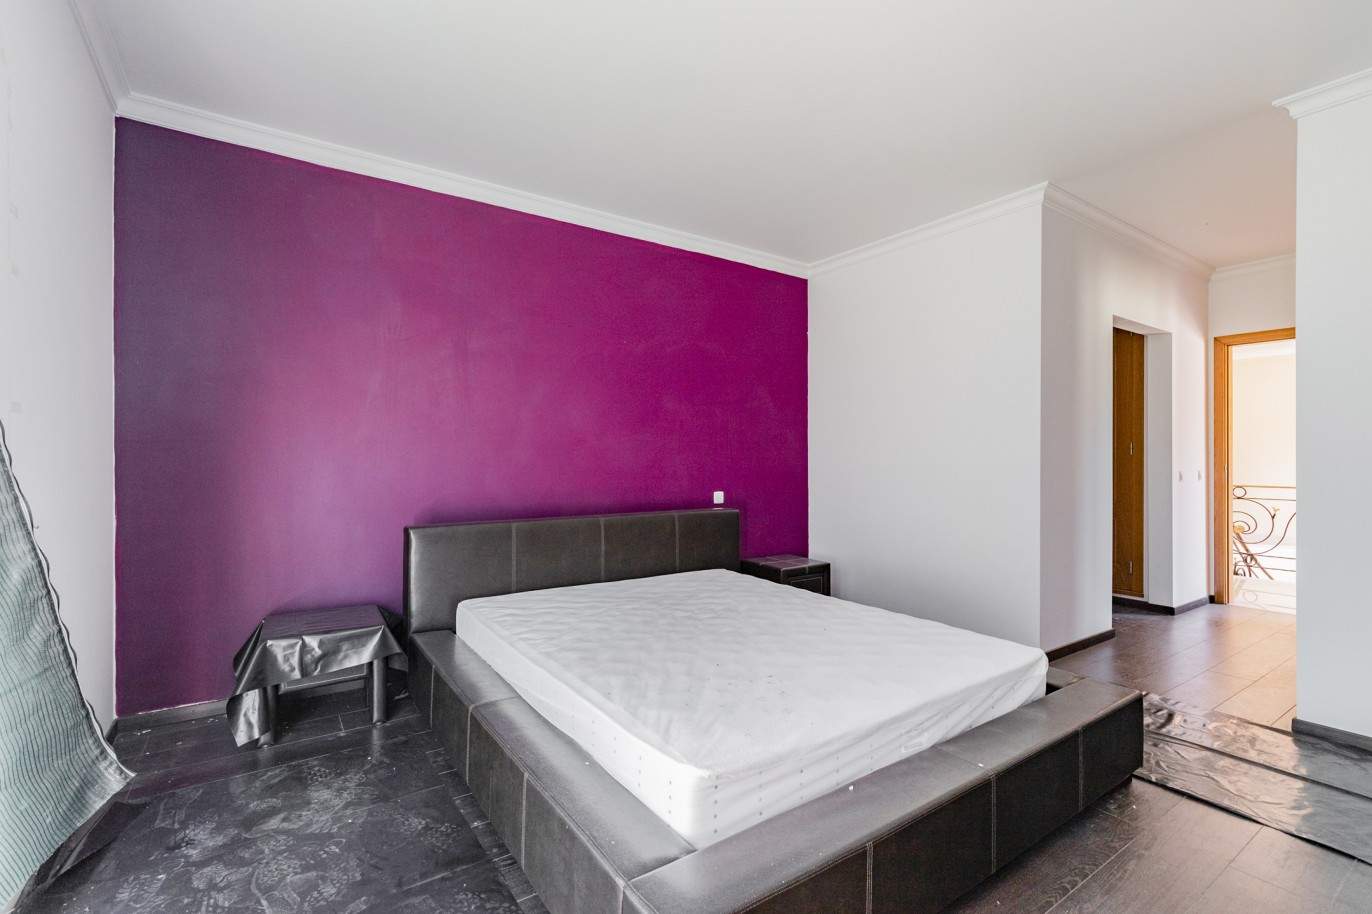 4 Bedroom Villa à vendre à Monte Judeu, Portimão, Algarve_207300